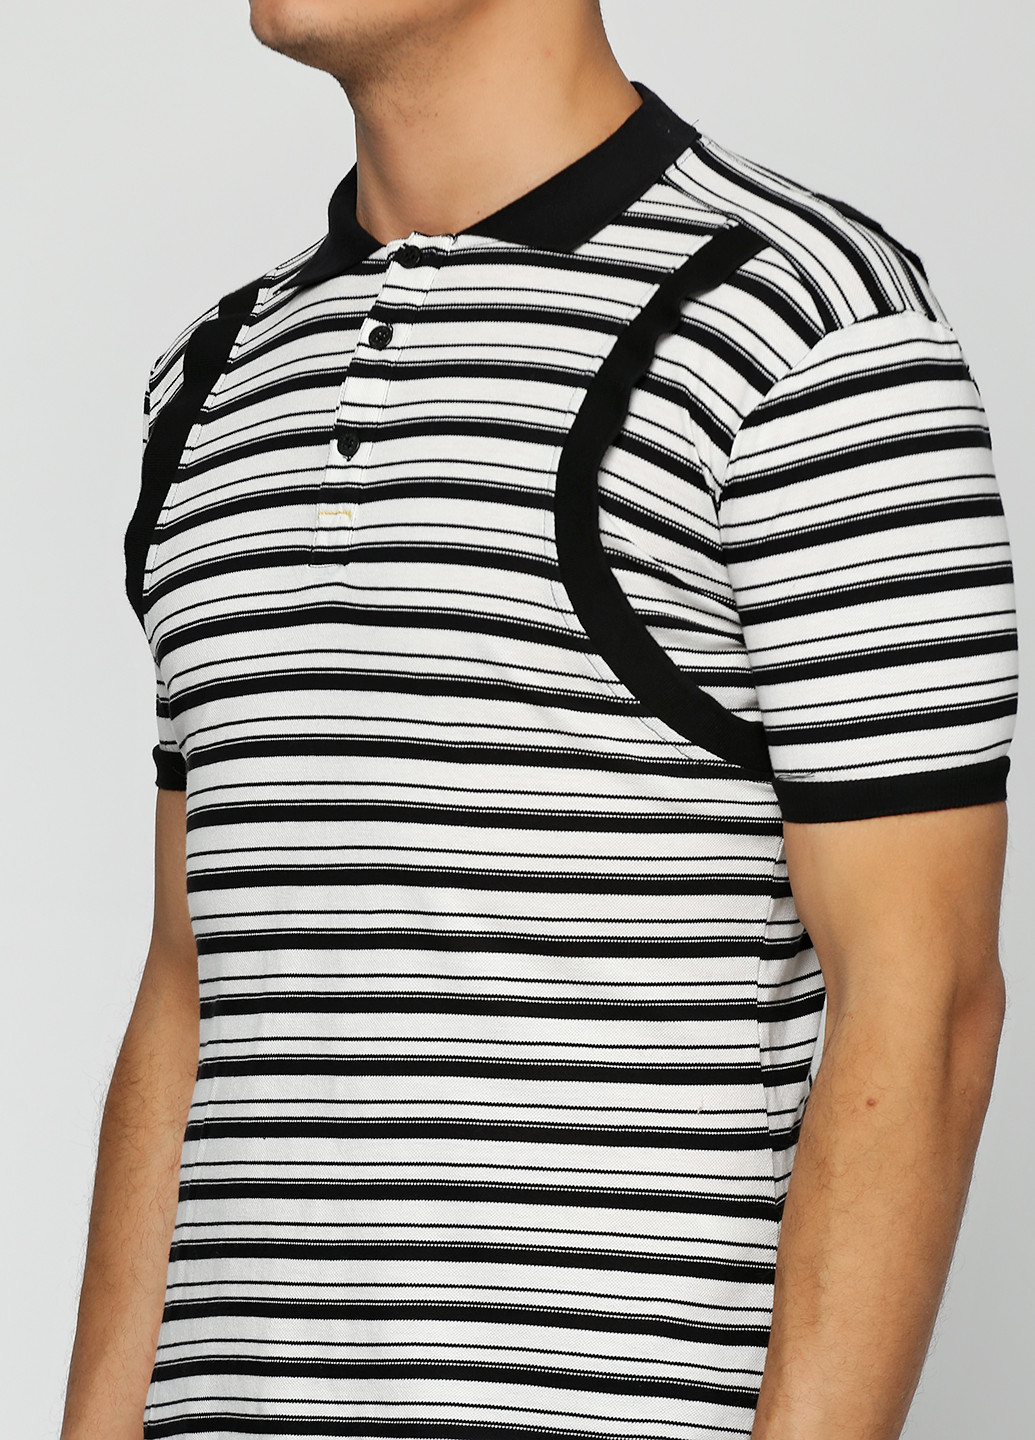 Черно-белая футболка-поло для мужчин Richmond Denim в полоску